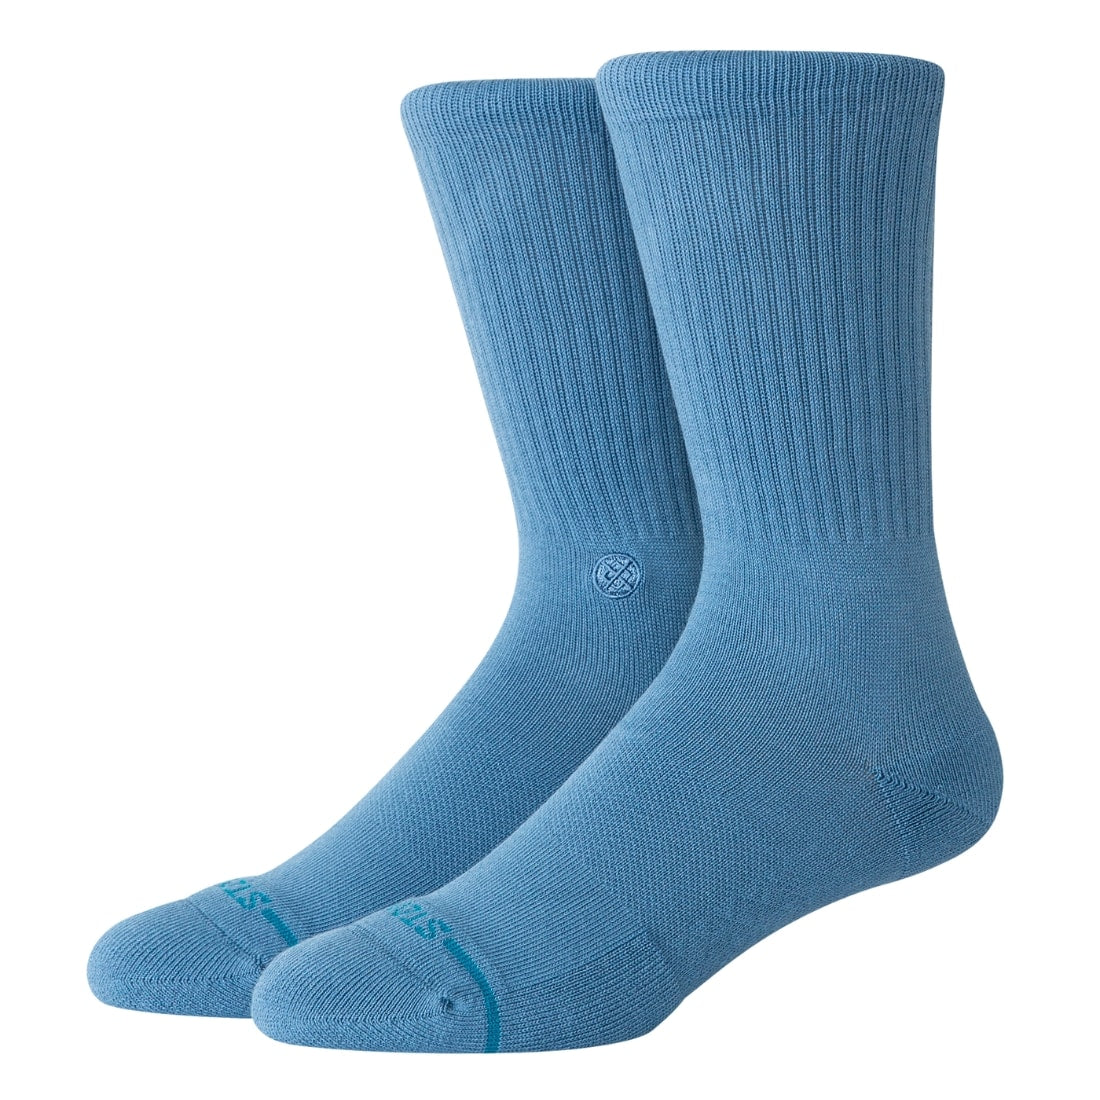 Stance Icon Socks - Blue Steel - Mens Crew Length Socks by Stance